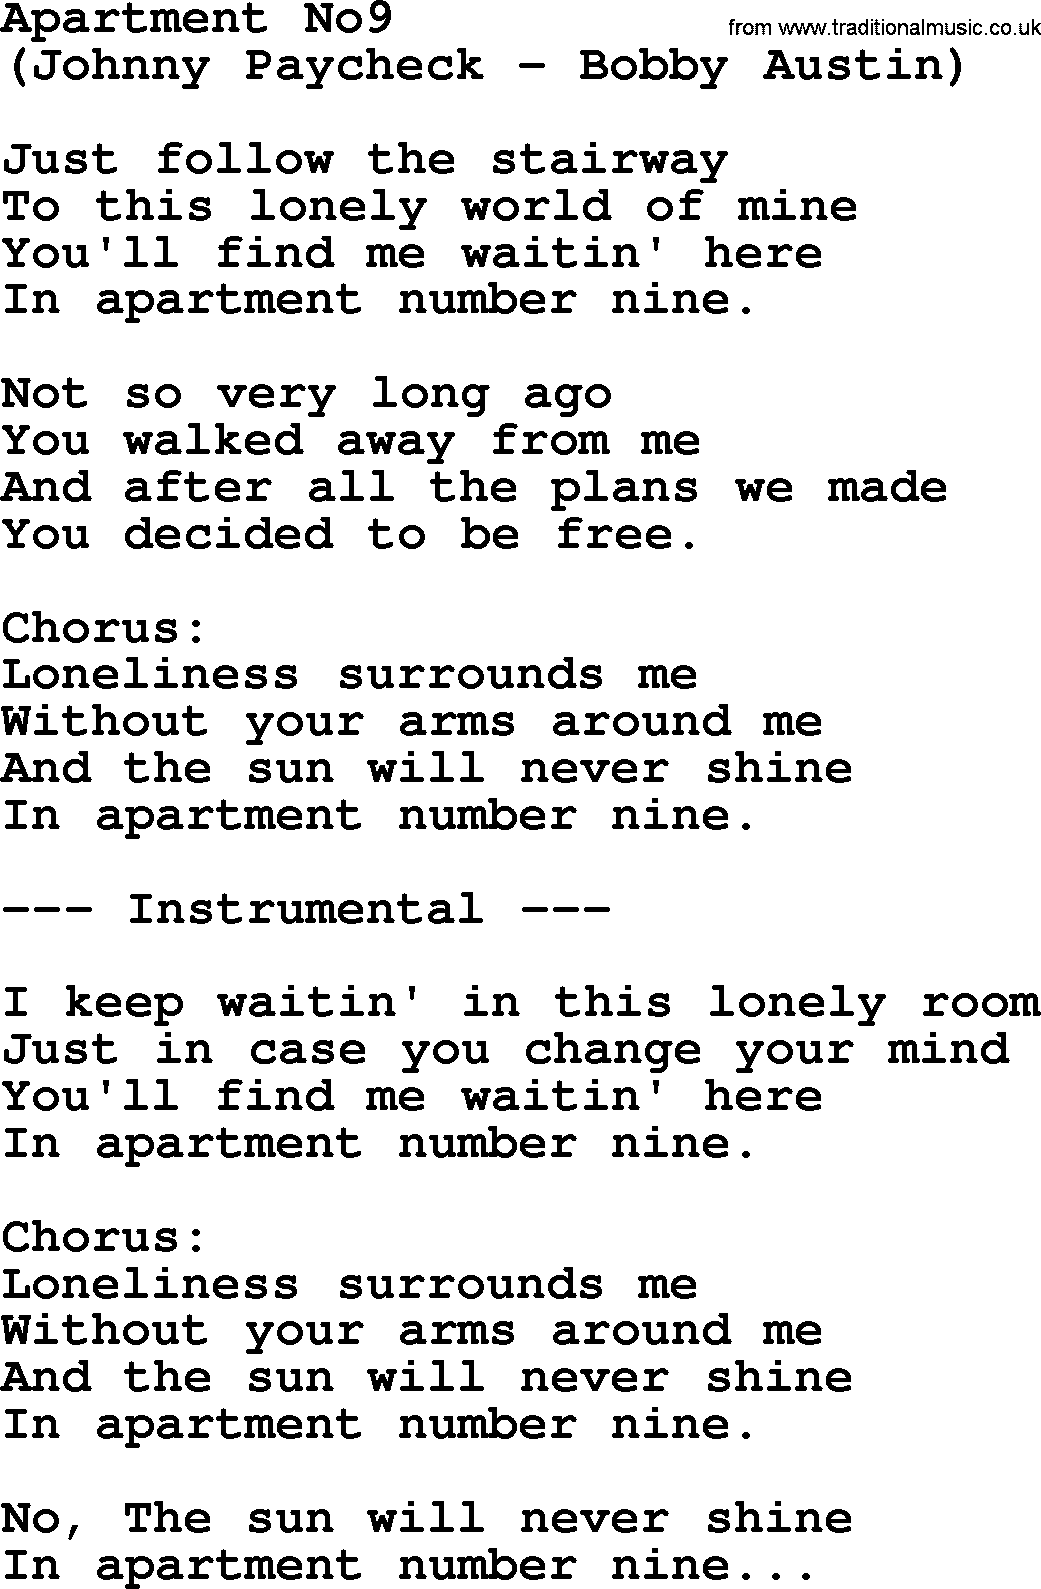 George Jones song: Apartment No9, lyrics